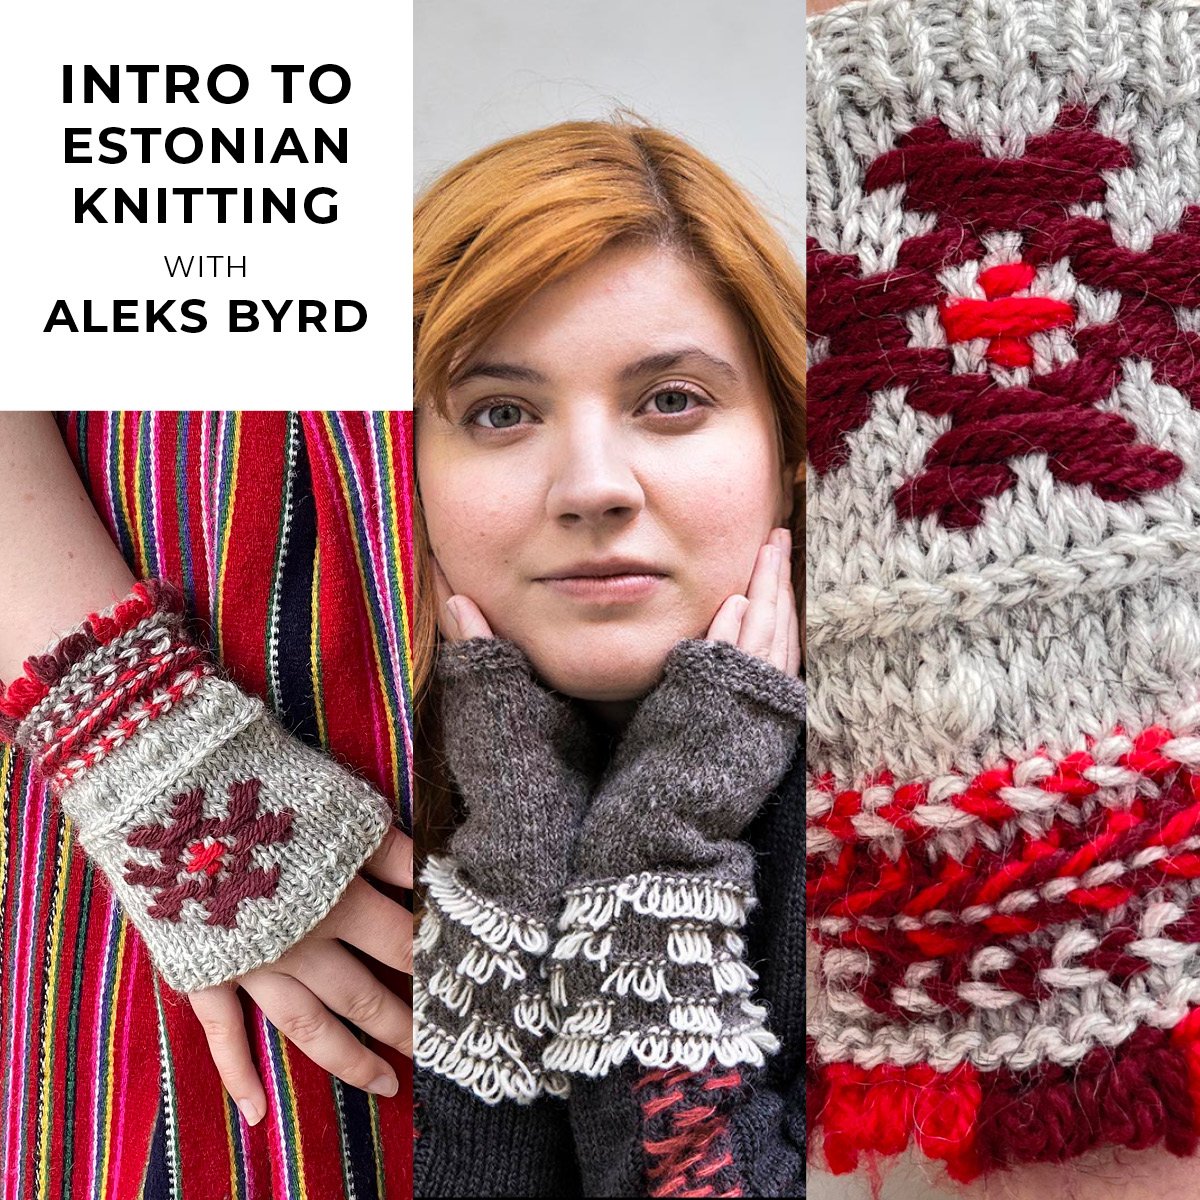 Aleks-Byrd-Intro-to-Estonian-Knitting-workshop-collage-Aleks-Byrd-Designs-square-web (1).jpg